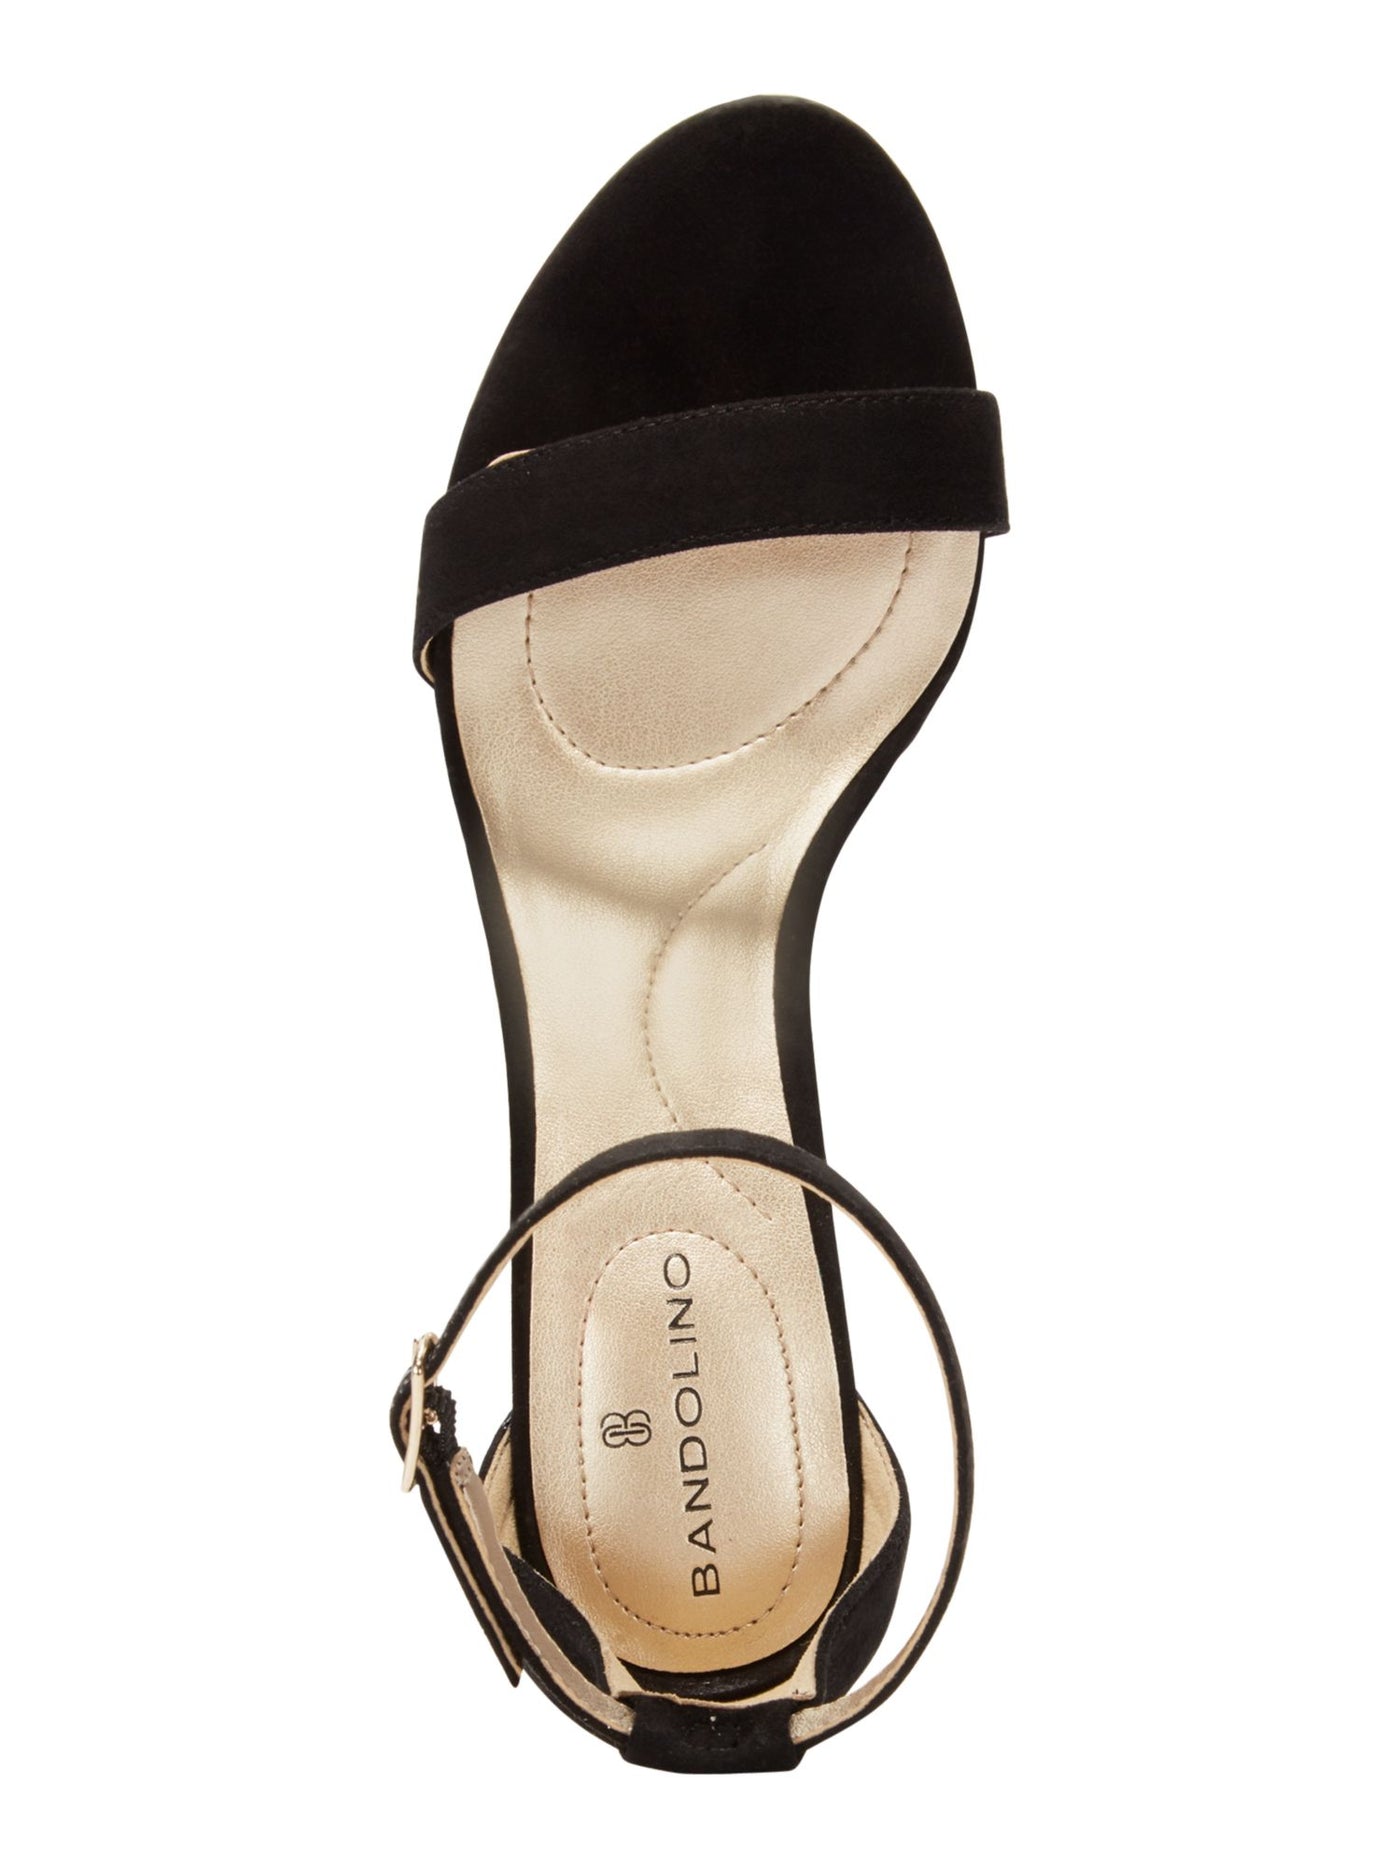 BANDOLINO Womens Black Adjustable Strap Padded Armory Round Toe Block Heel Buckle Dress Sandals Shoes 8.5 M